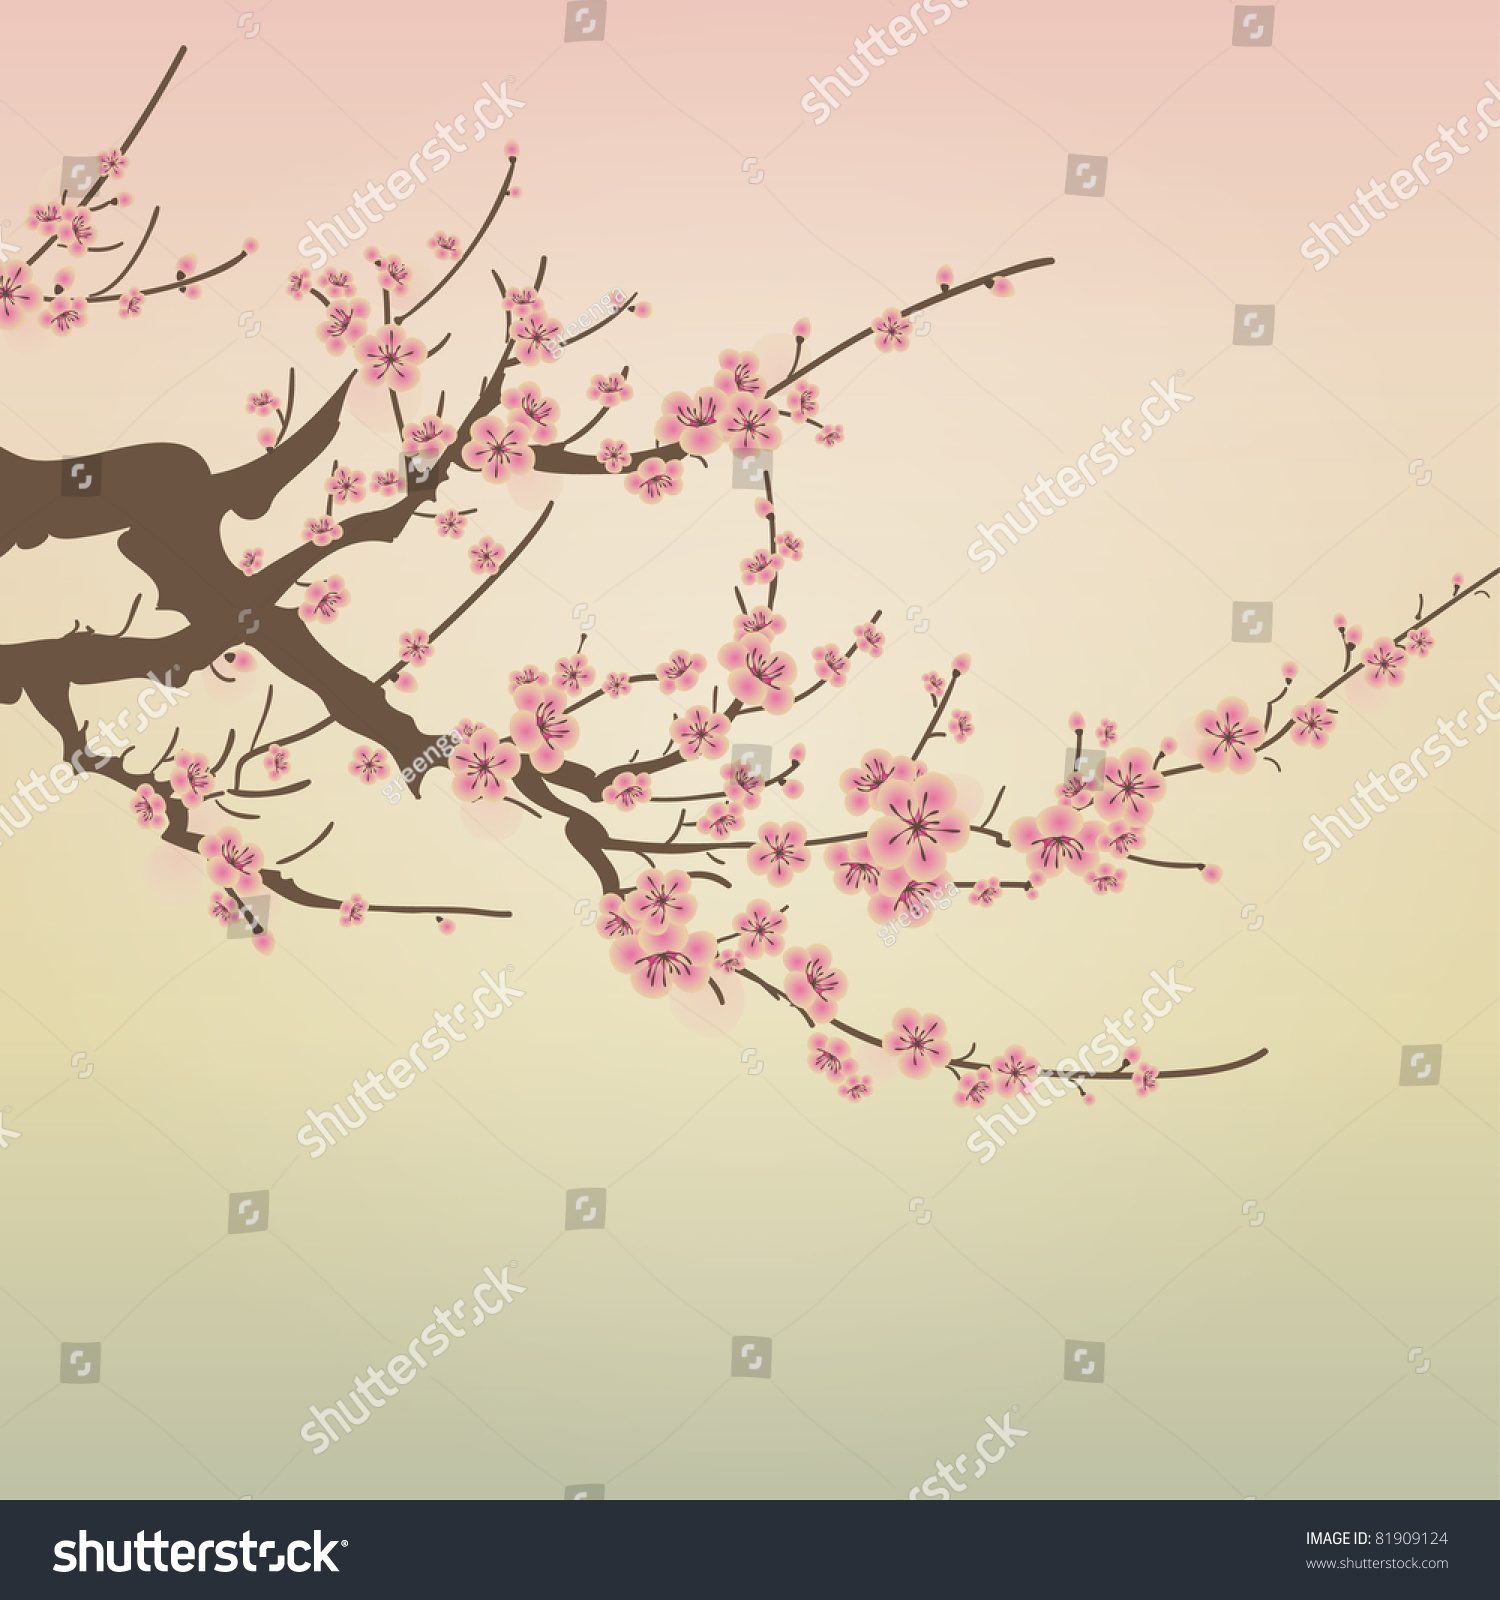 Vector Branch Cherry Blossom Stock Vector 81909124 - Shutterstock